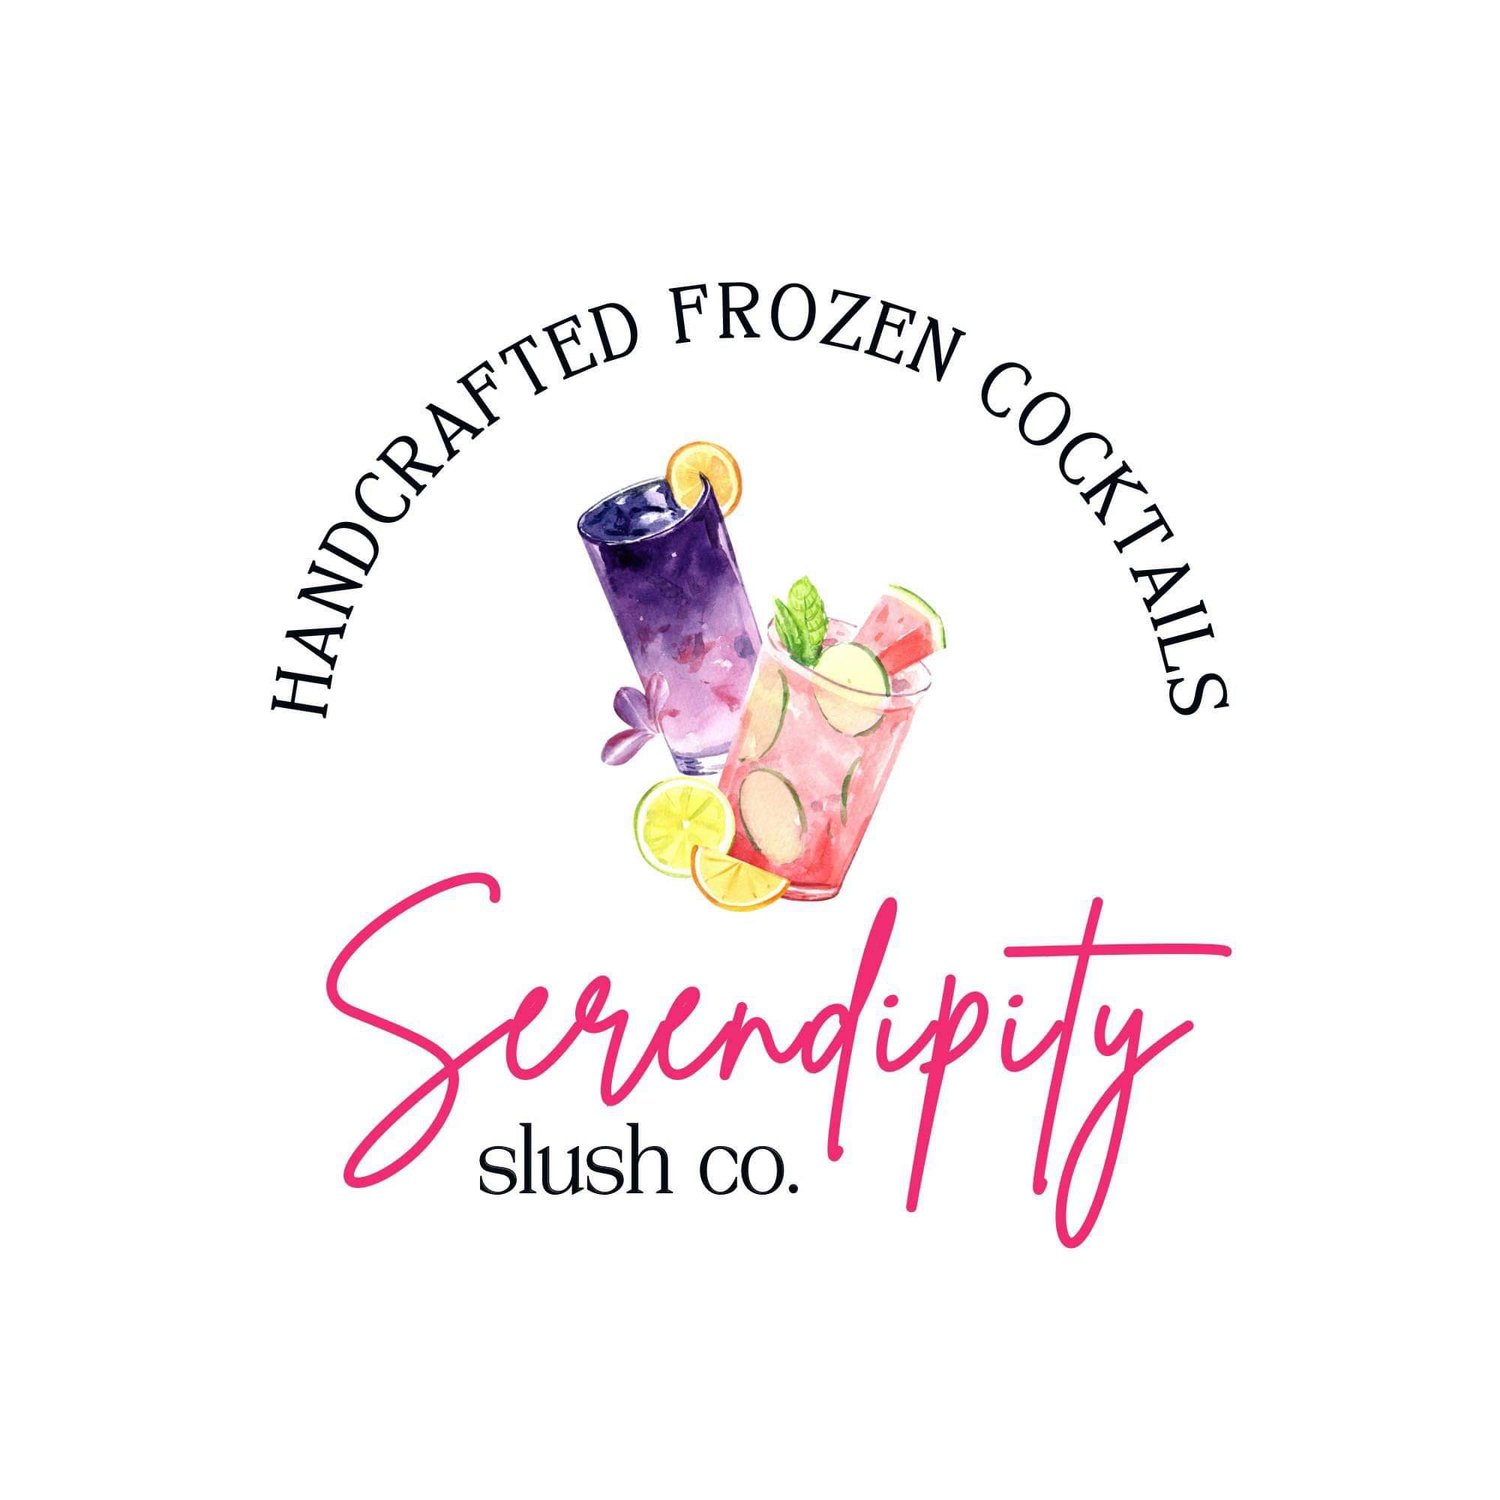 Serendipity Slush Co